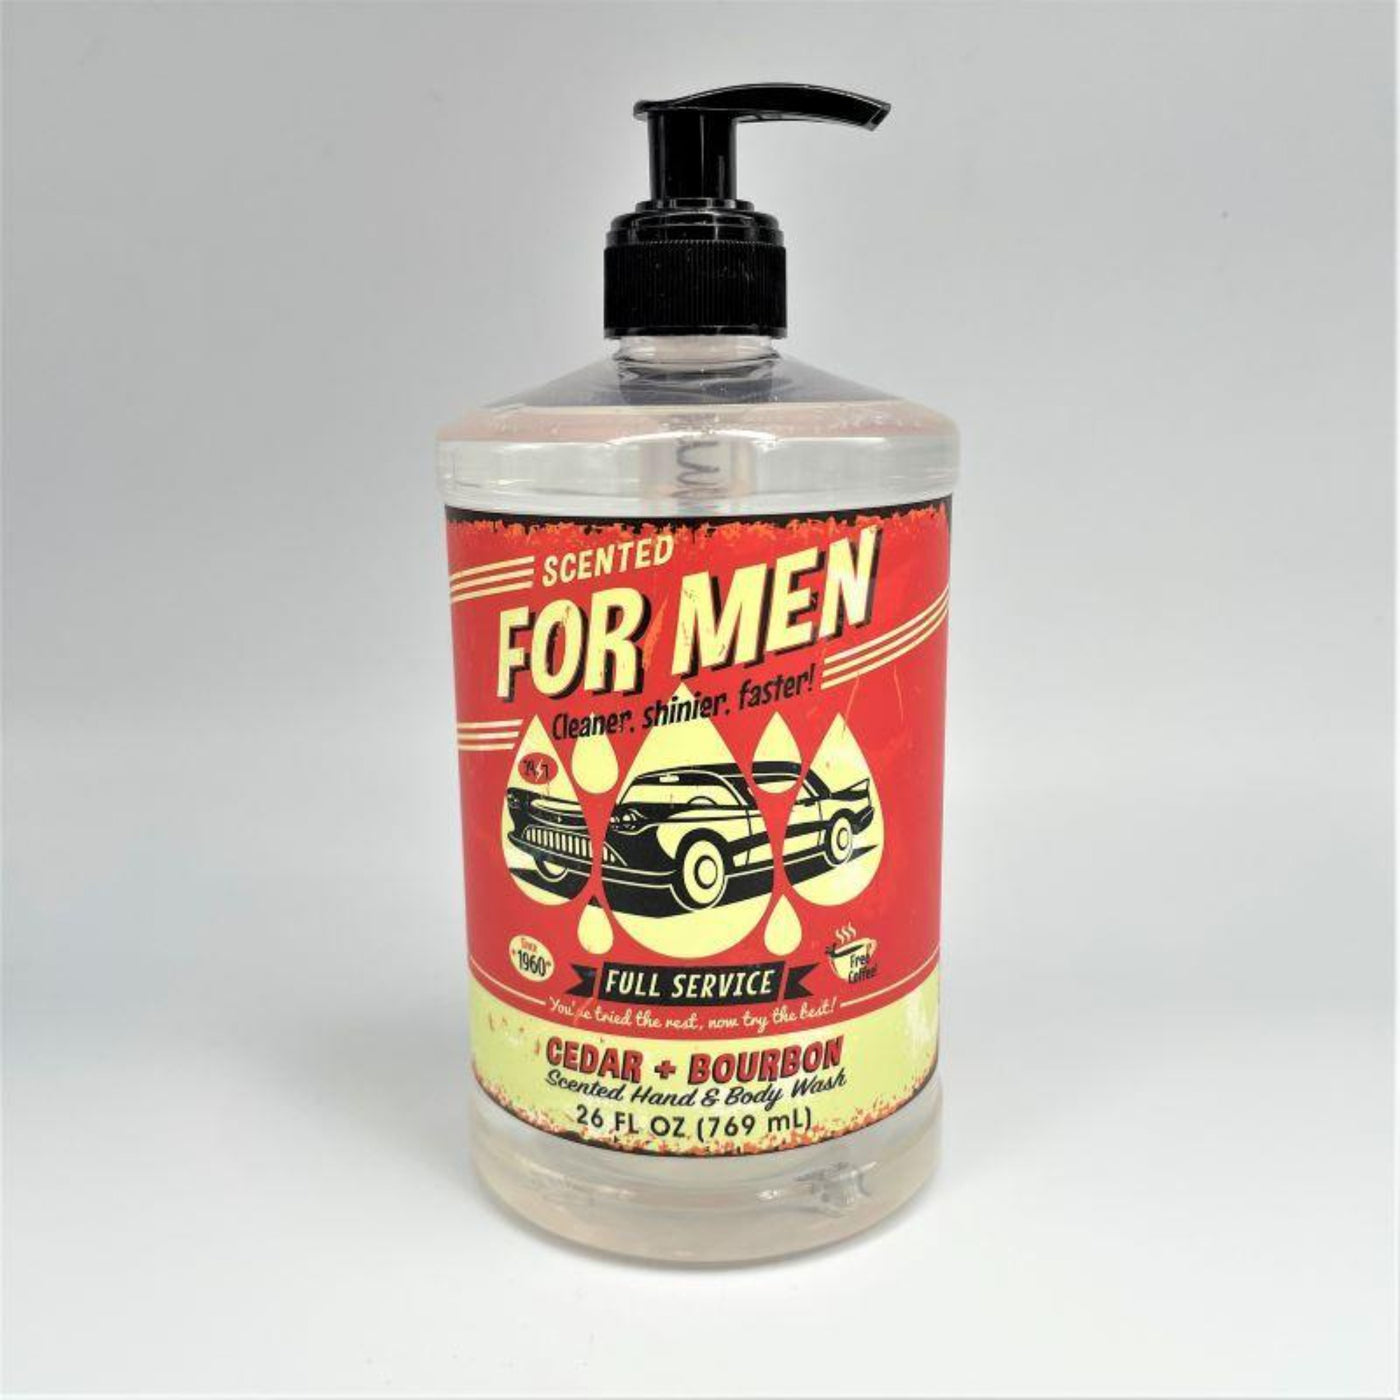 Cedar & Bourbon Men's Body Wash